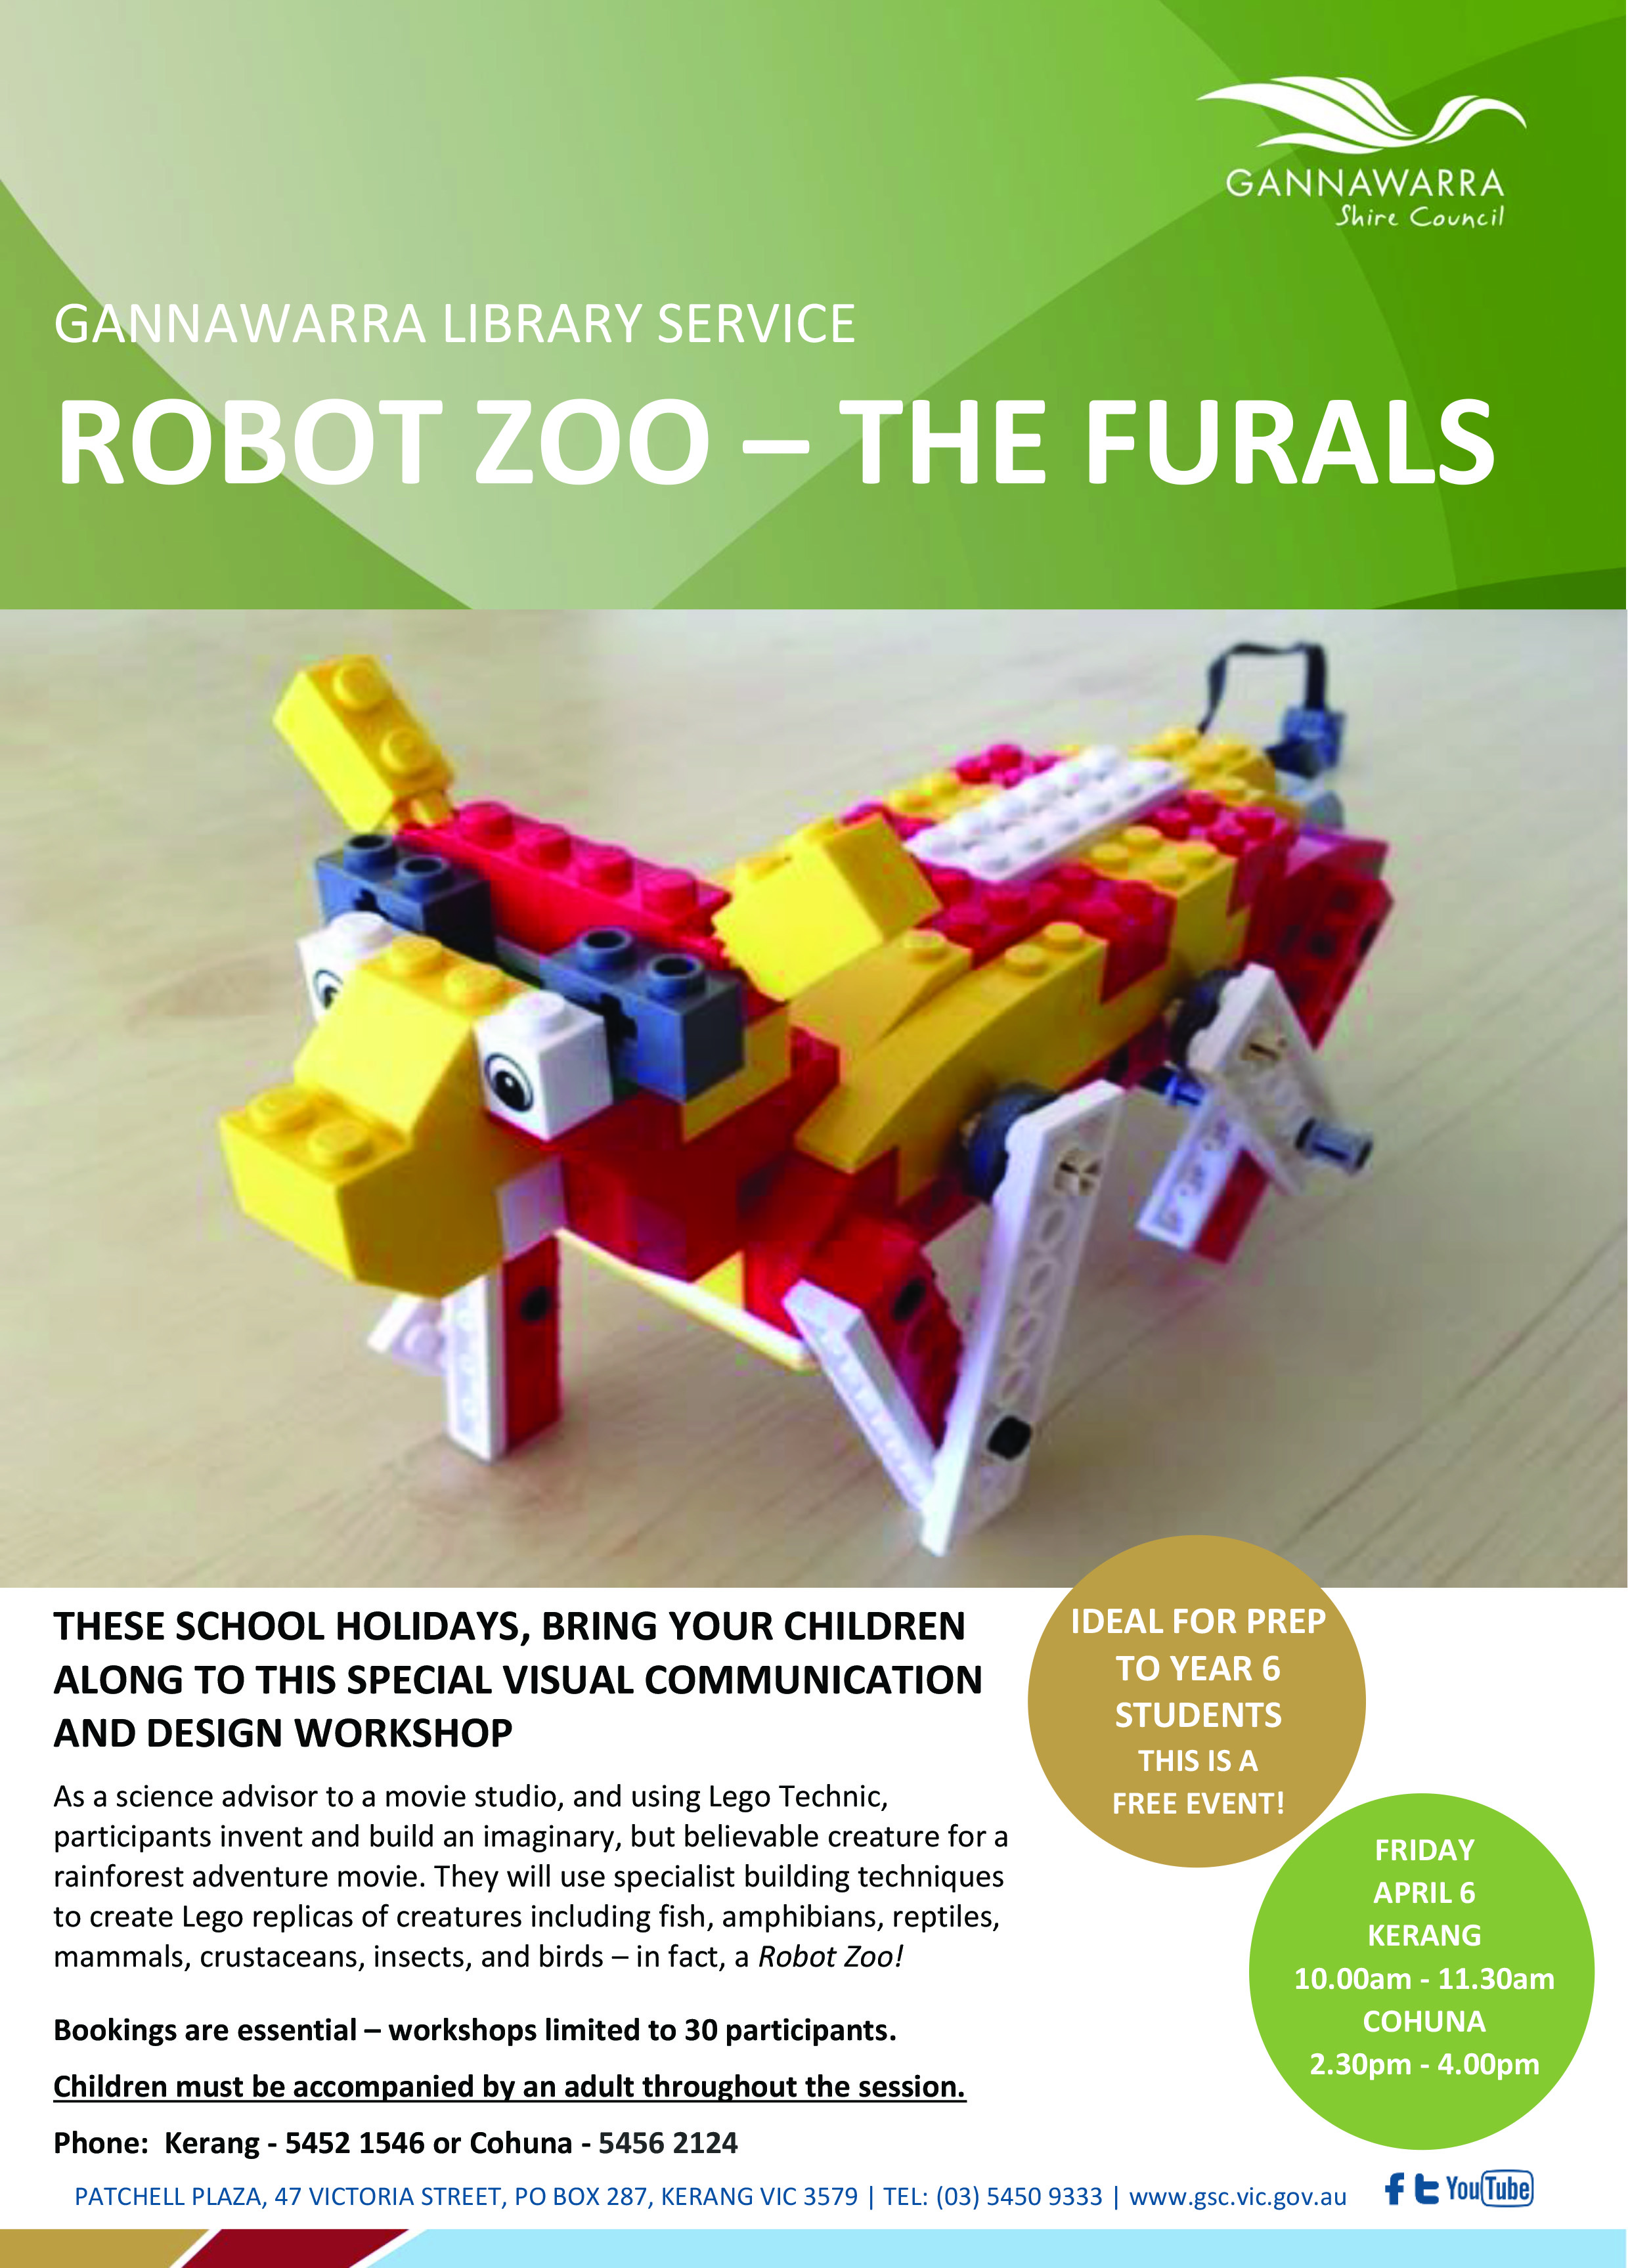 2018 Robot Zoo Poster.jpg